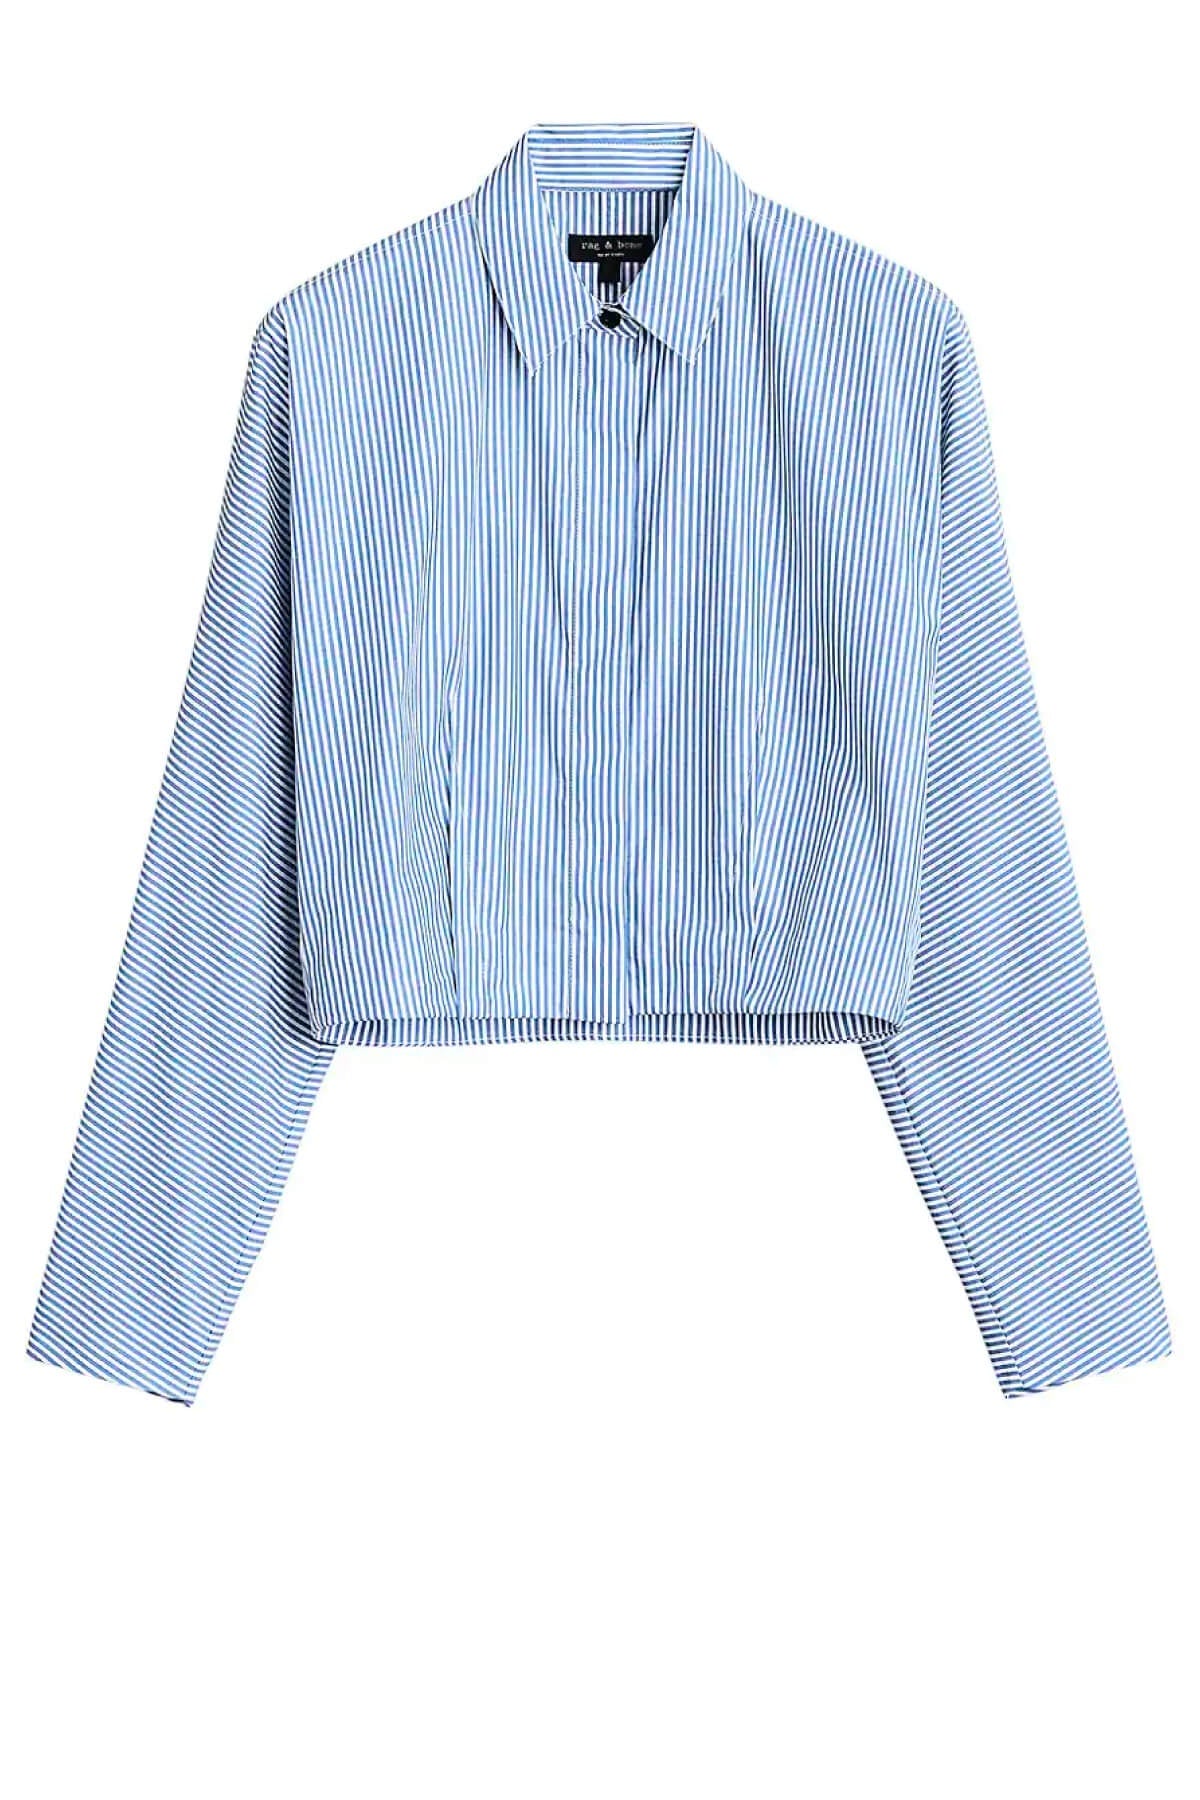 Rag & Bone Morgan Striped Cropped Shirt - Light Blue Stripe